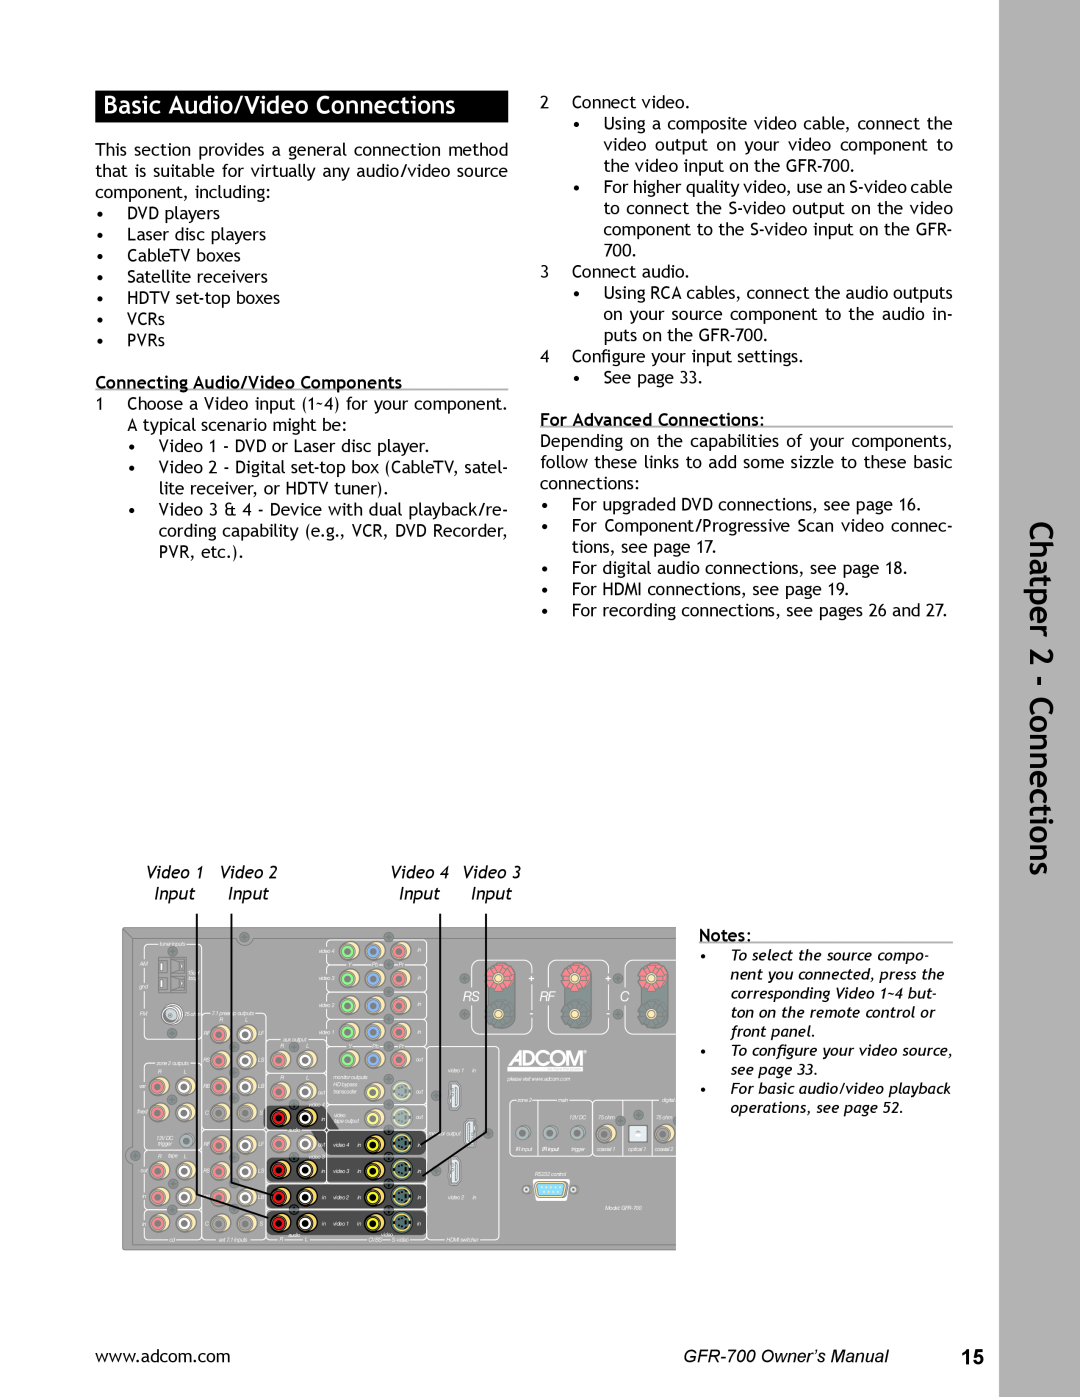 Adcom GFR-700 user manual Chatper 2 - Connections, Basic Audio/Video Connections, Connecting Audio/Video Components, Input 